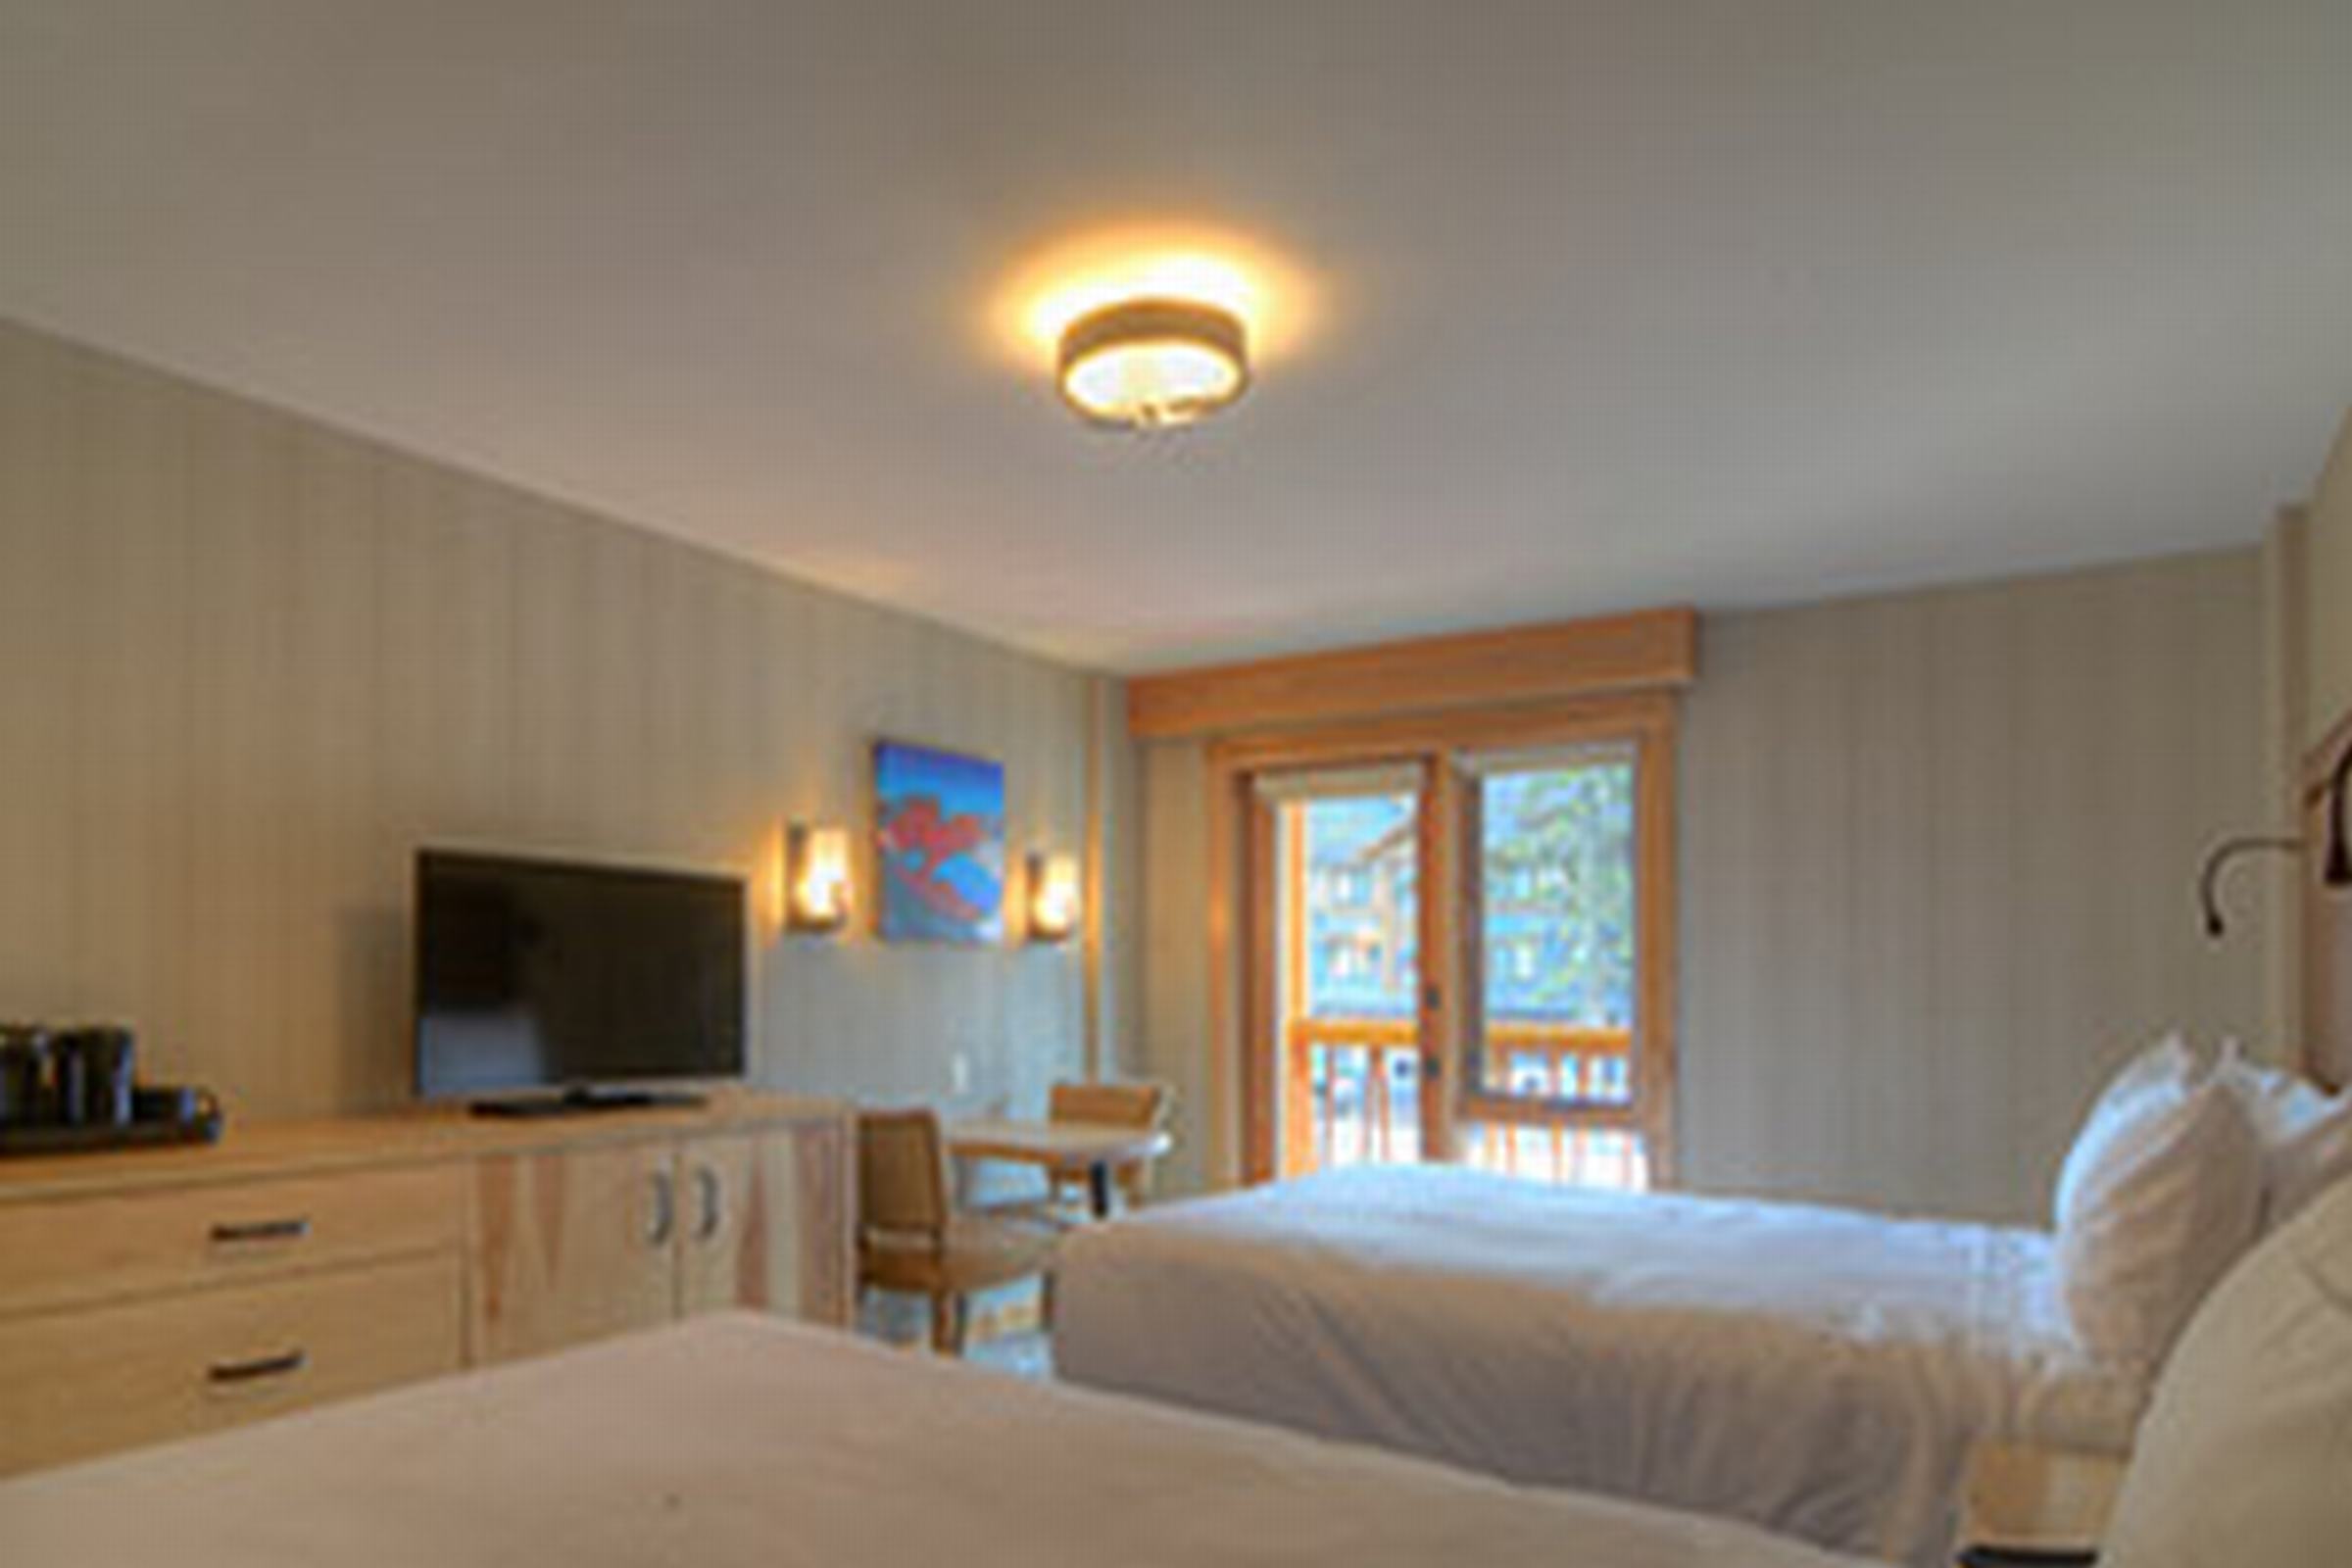 Moose Hotel & Suites